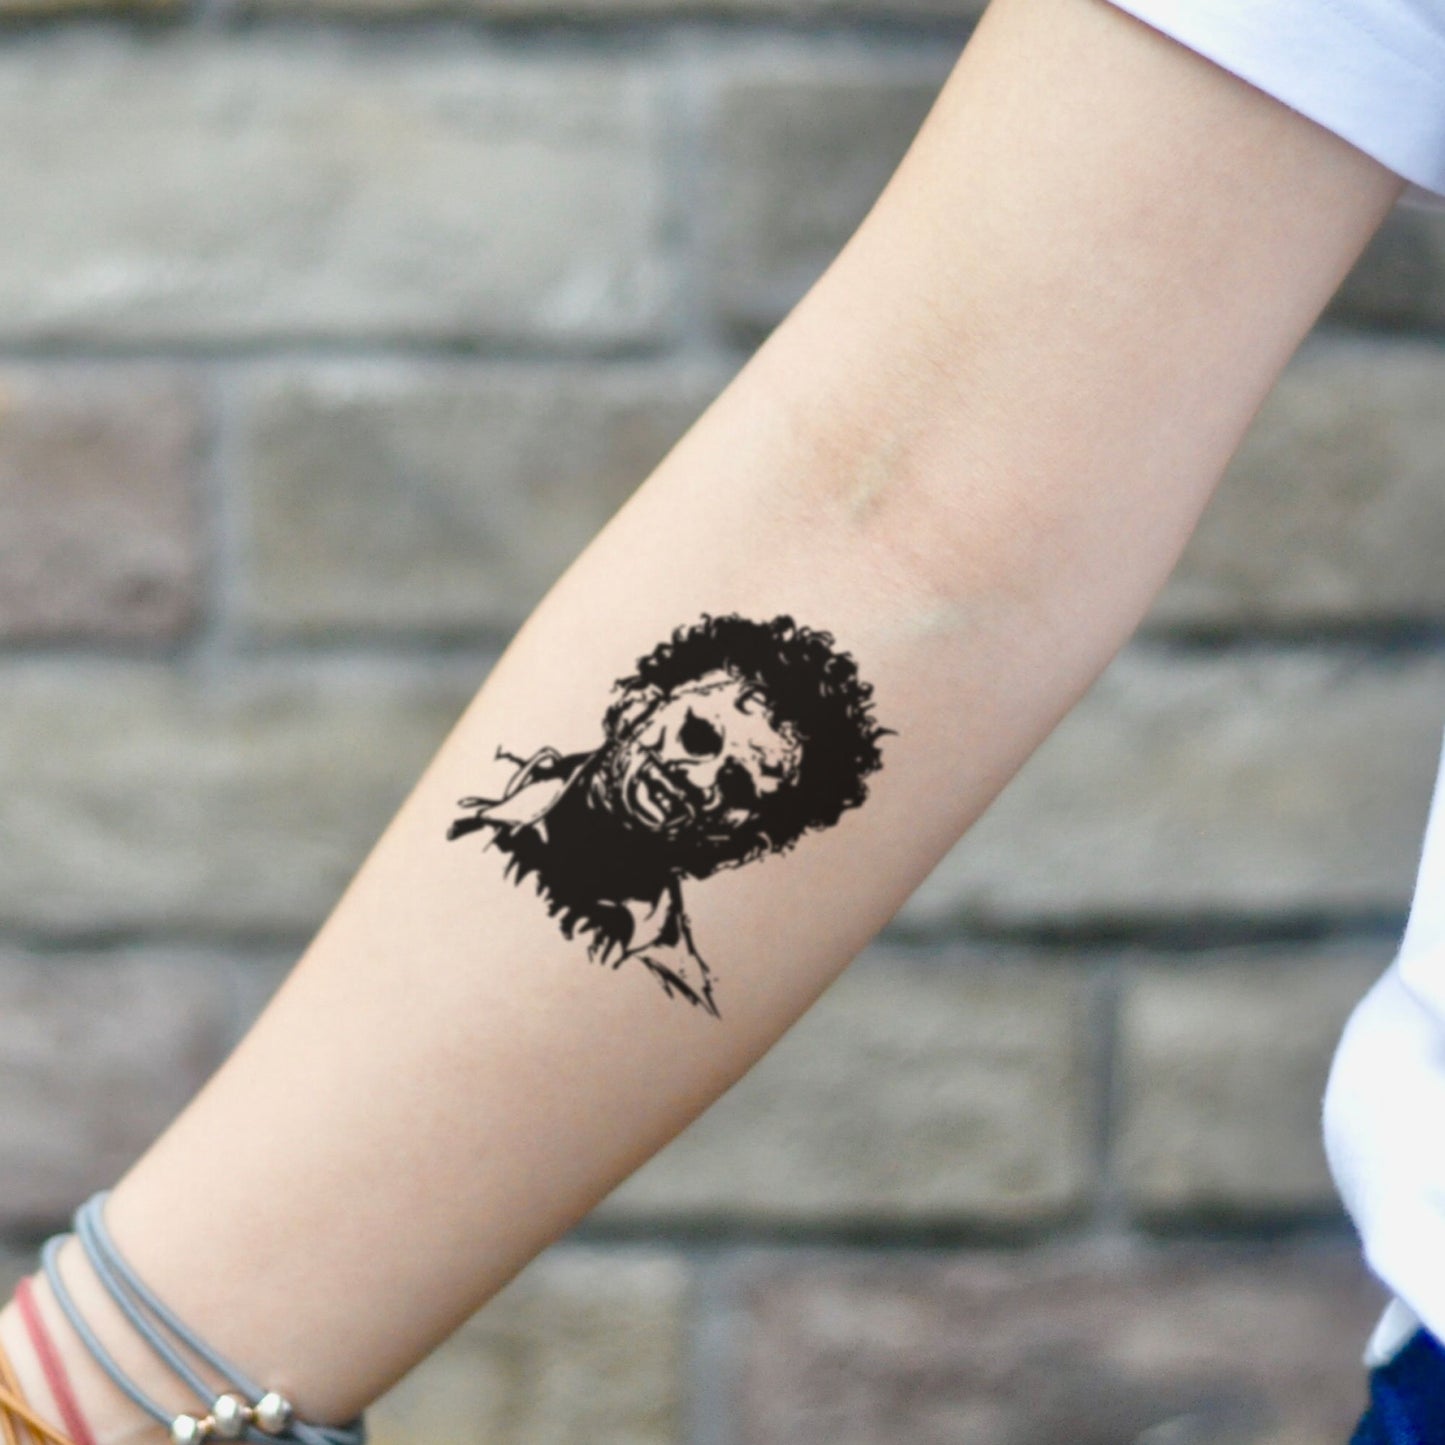 fake small leatherface portrait temporary tattoo sticker design idea on inner arm